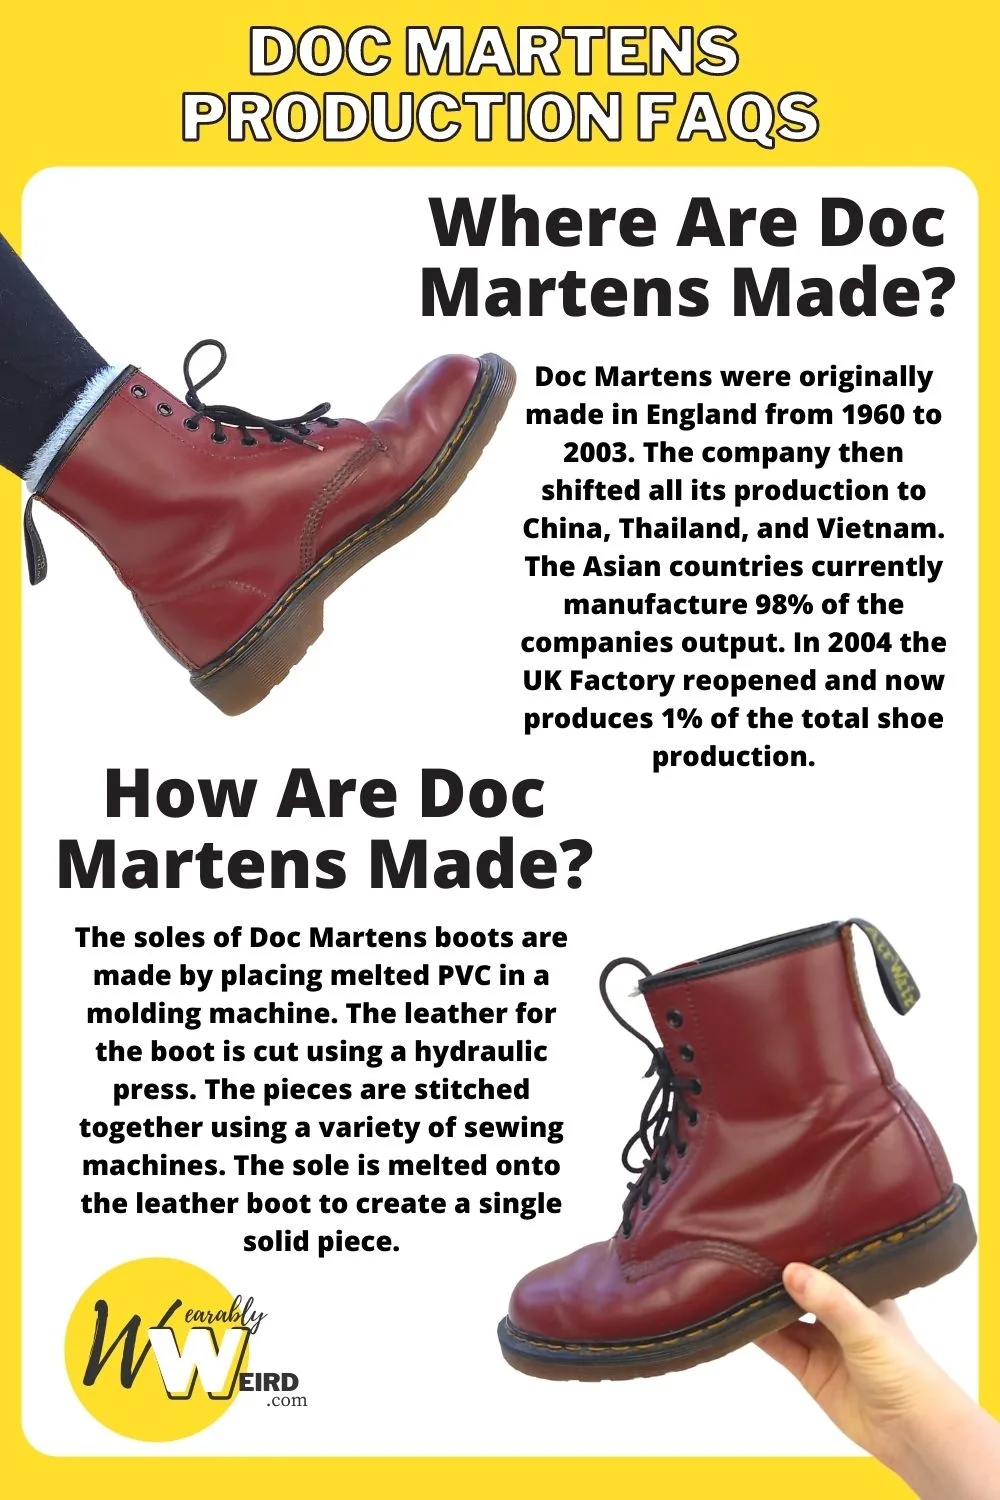 Where are Doc Martens Made